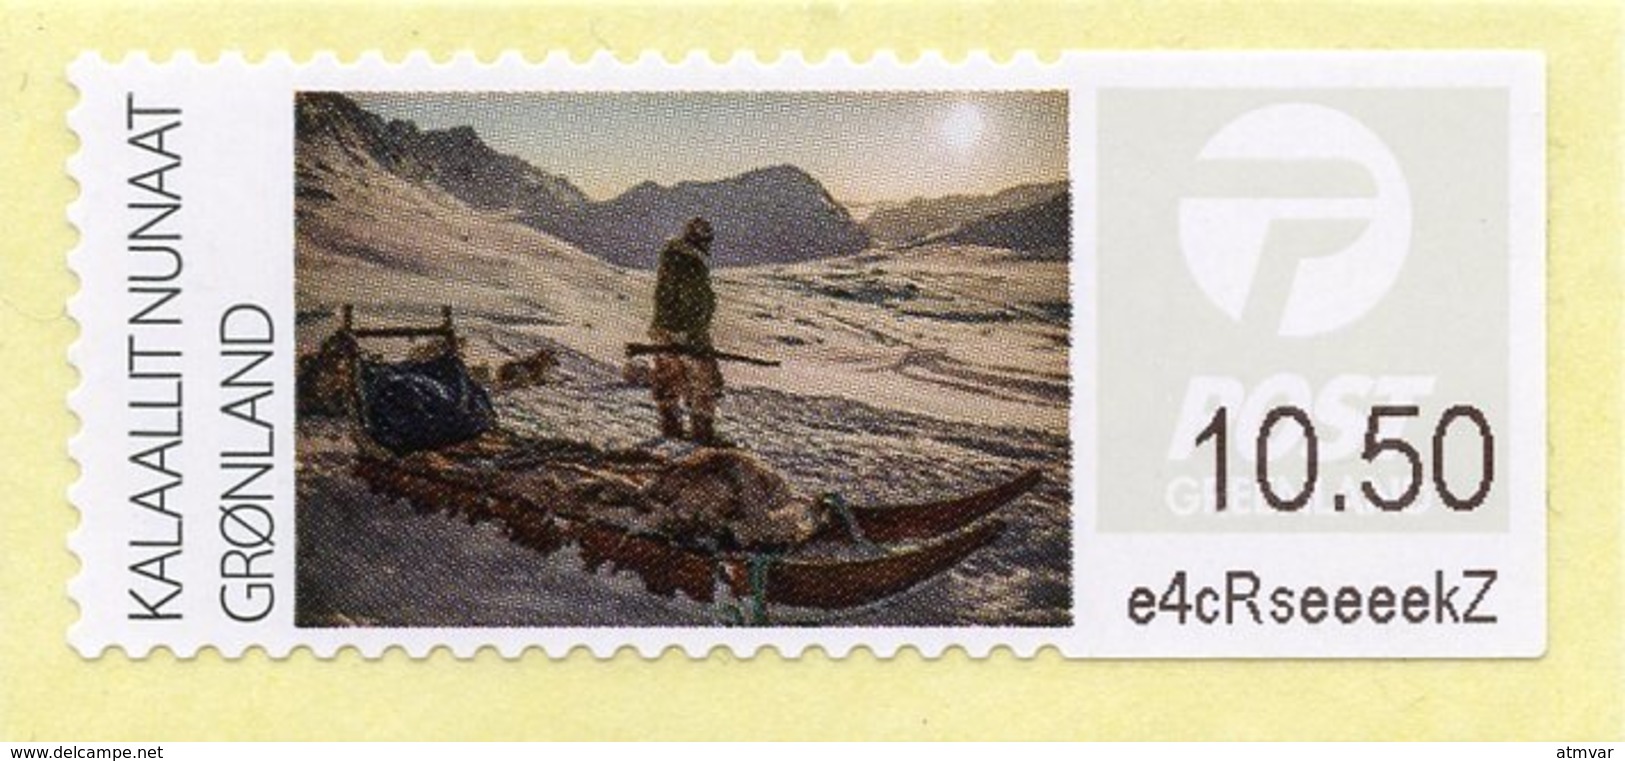 GREENLAND / GROENLAND (2016) - ATM - Greenlandic Scenery - Chasse Polaire, Hunting - Distributori